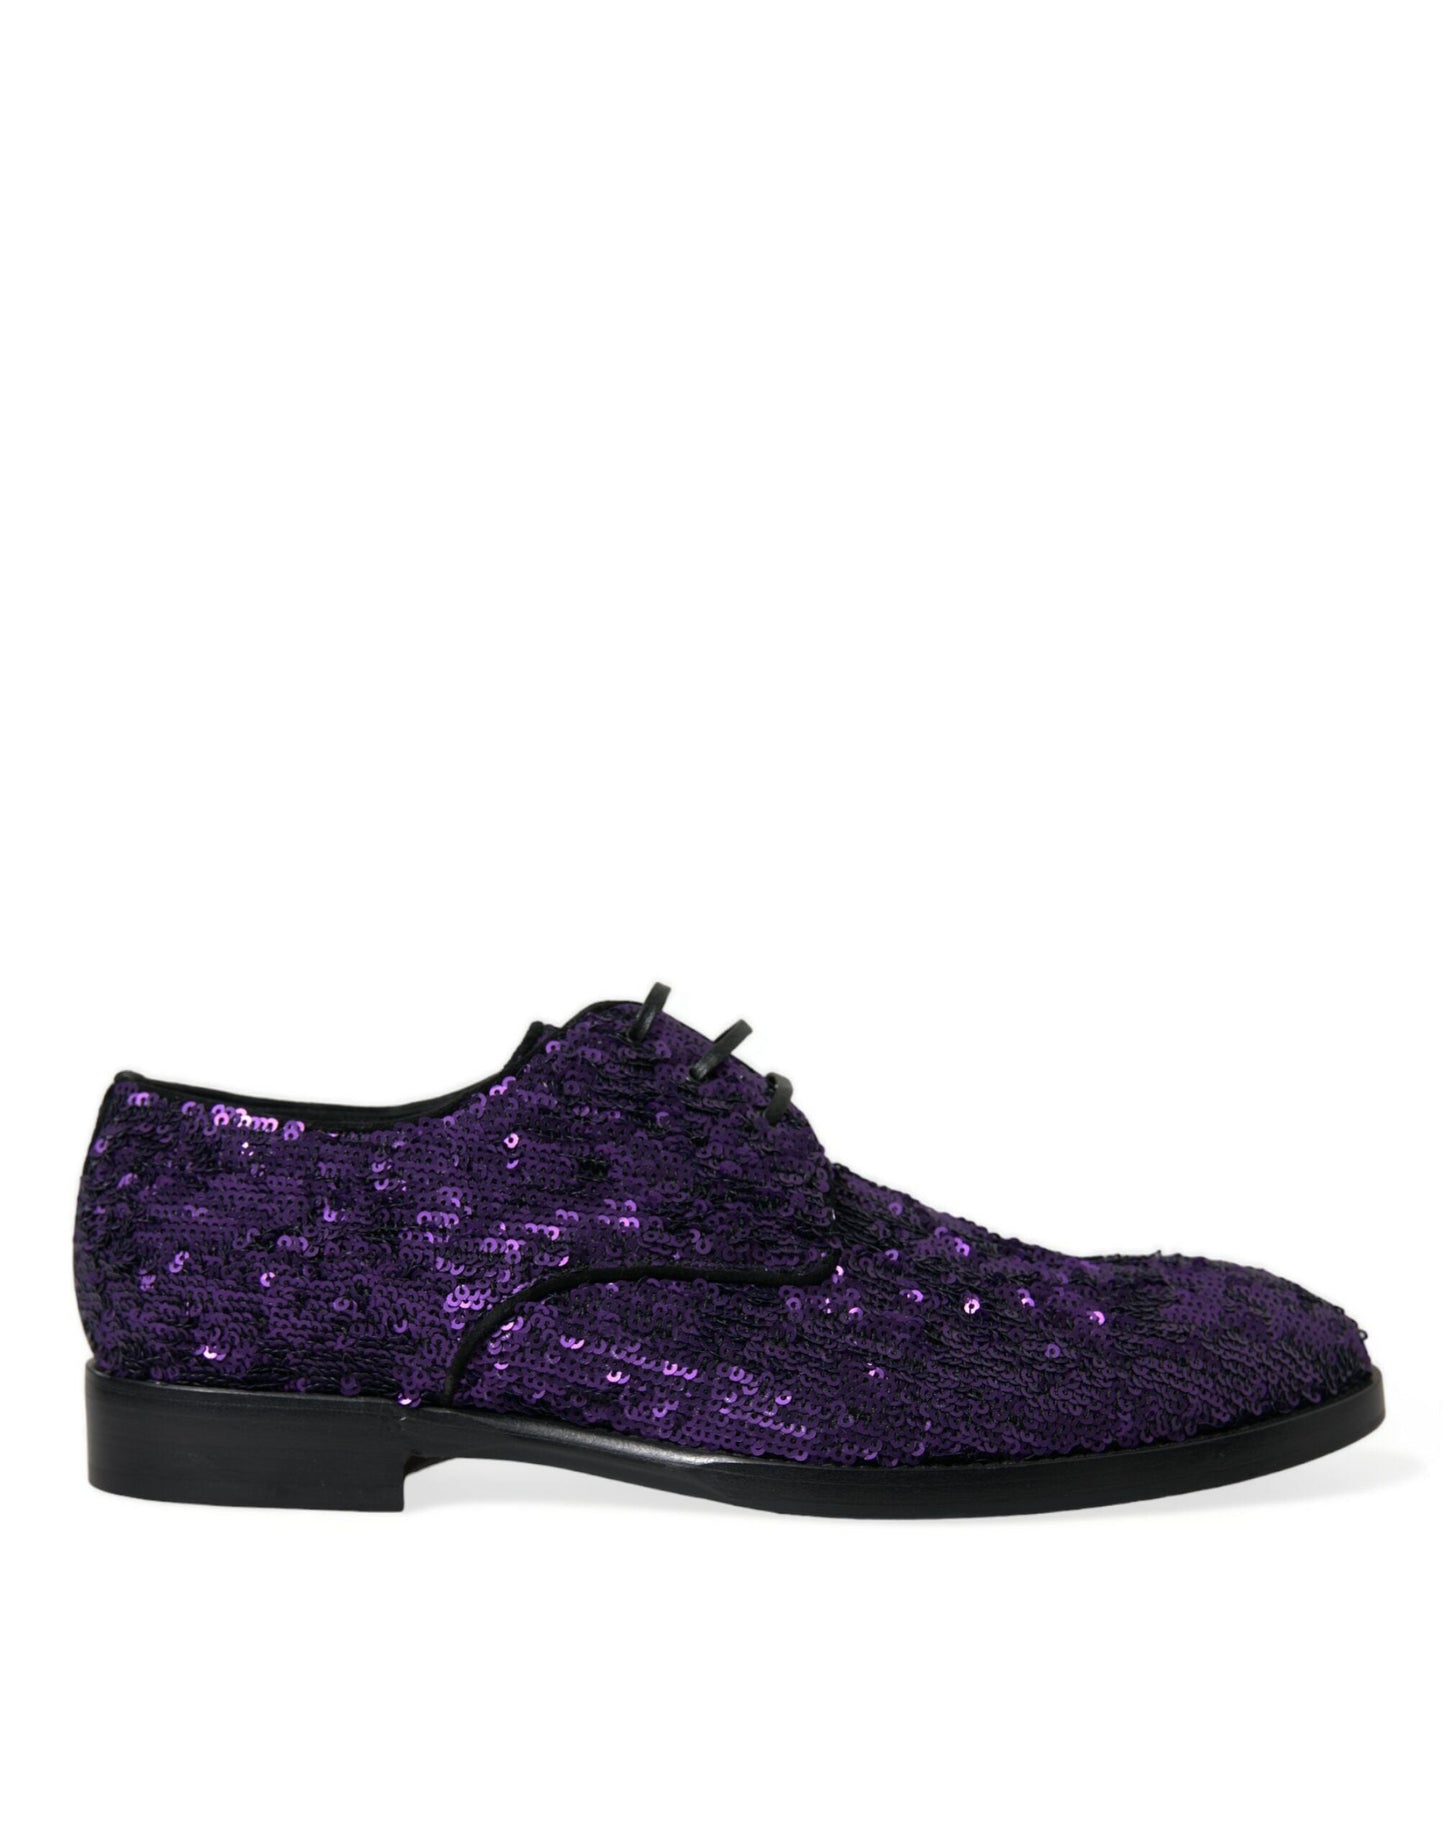 Dolce & Gabbana Purple Sequined Lace Up Oxford Dress Shoes | Fashionsarah.com